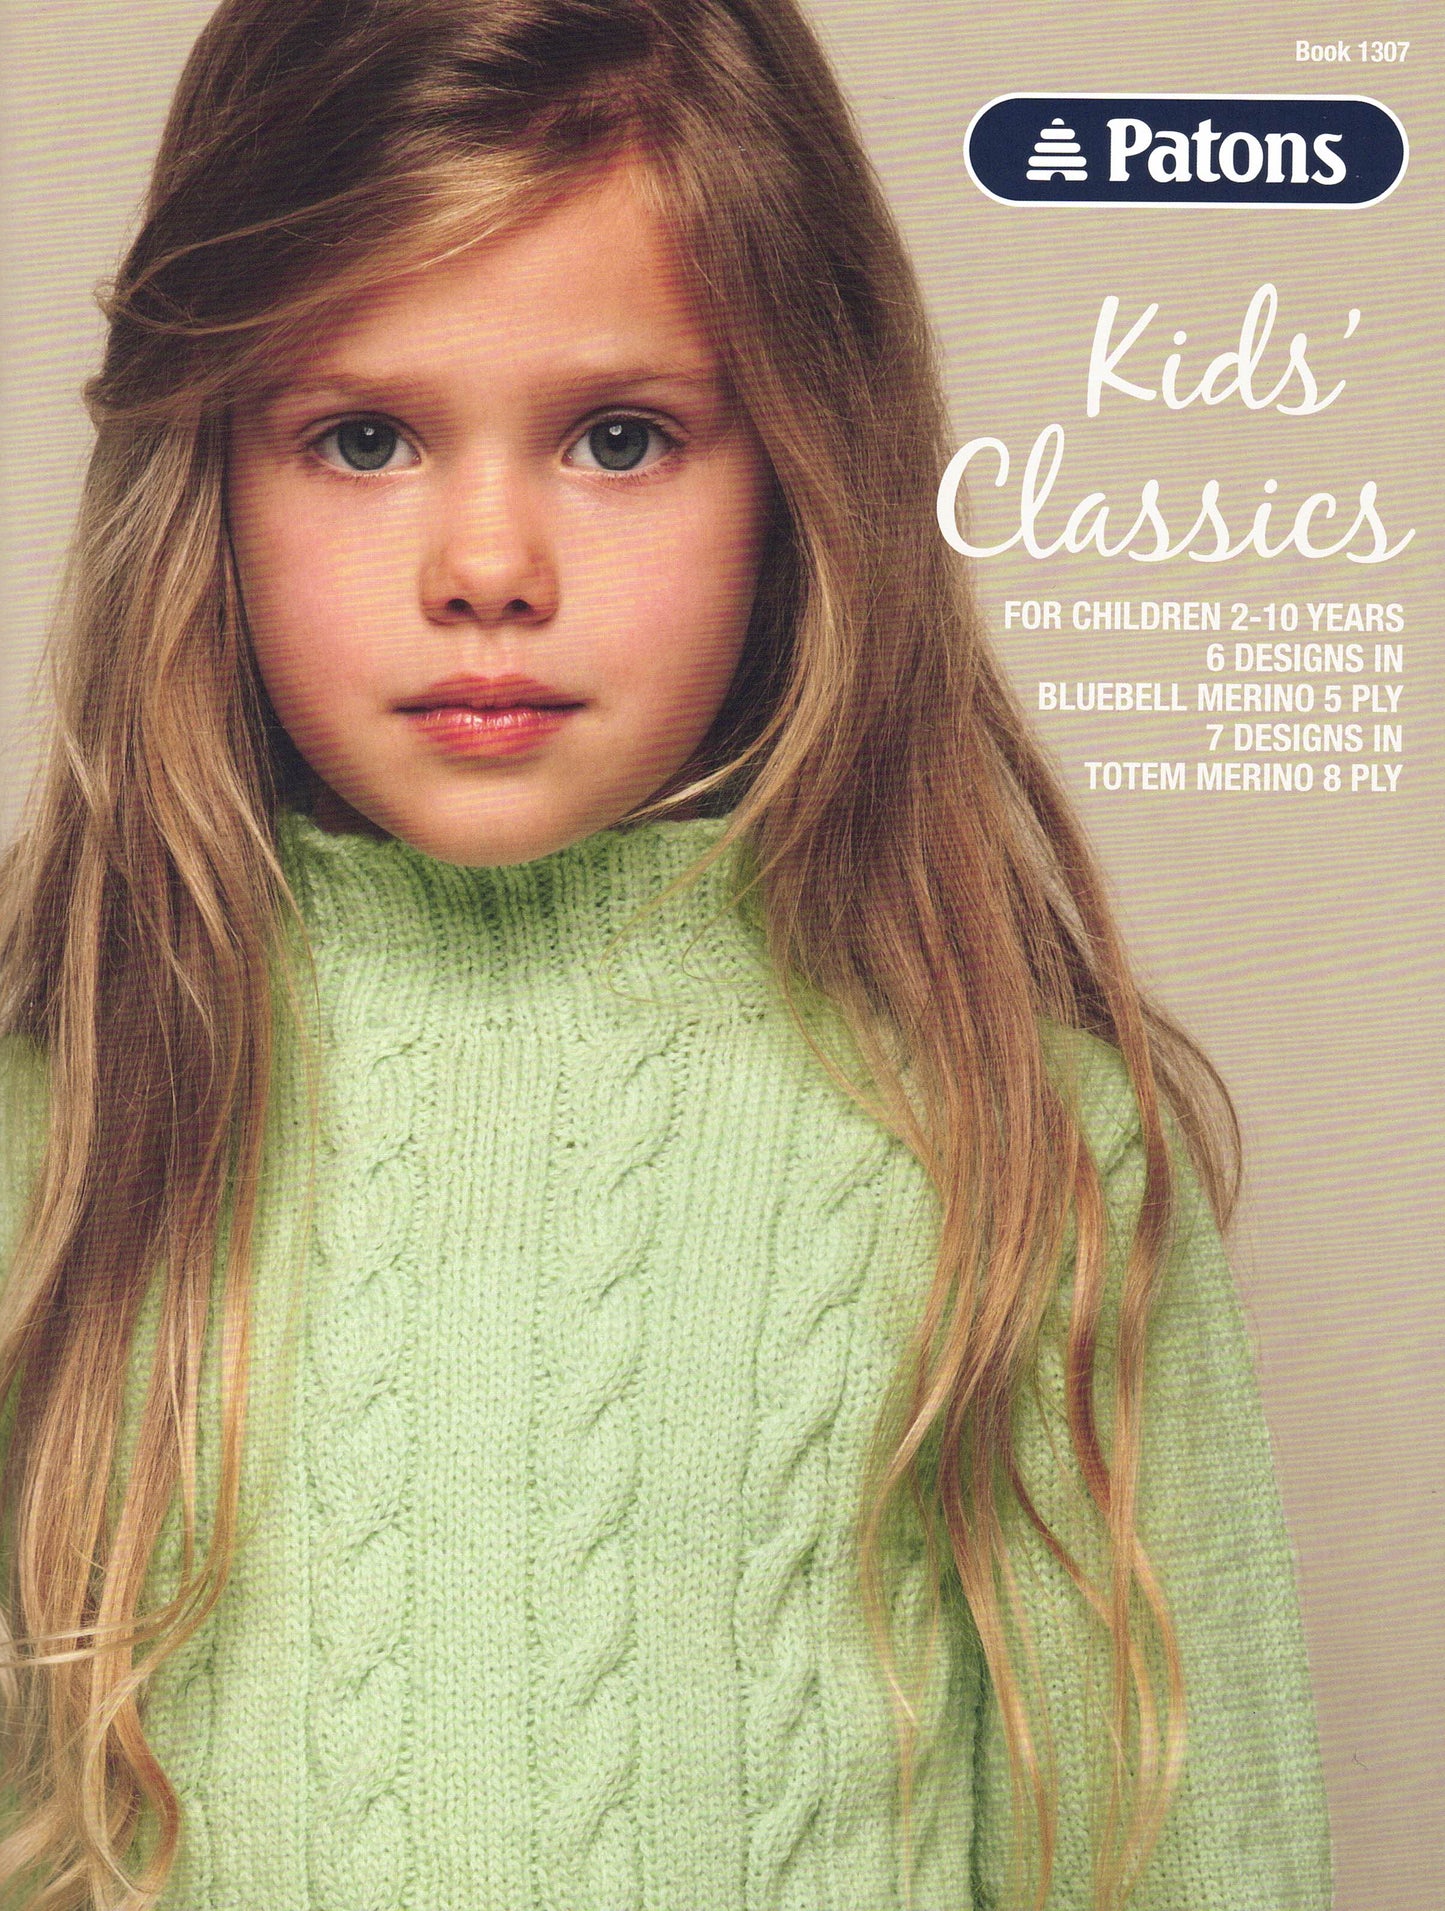 Children - Patons Book 1307 Kids' Classics